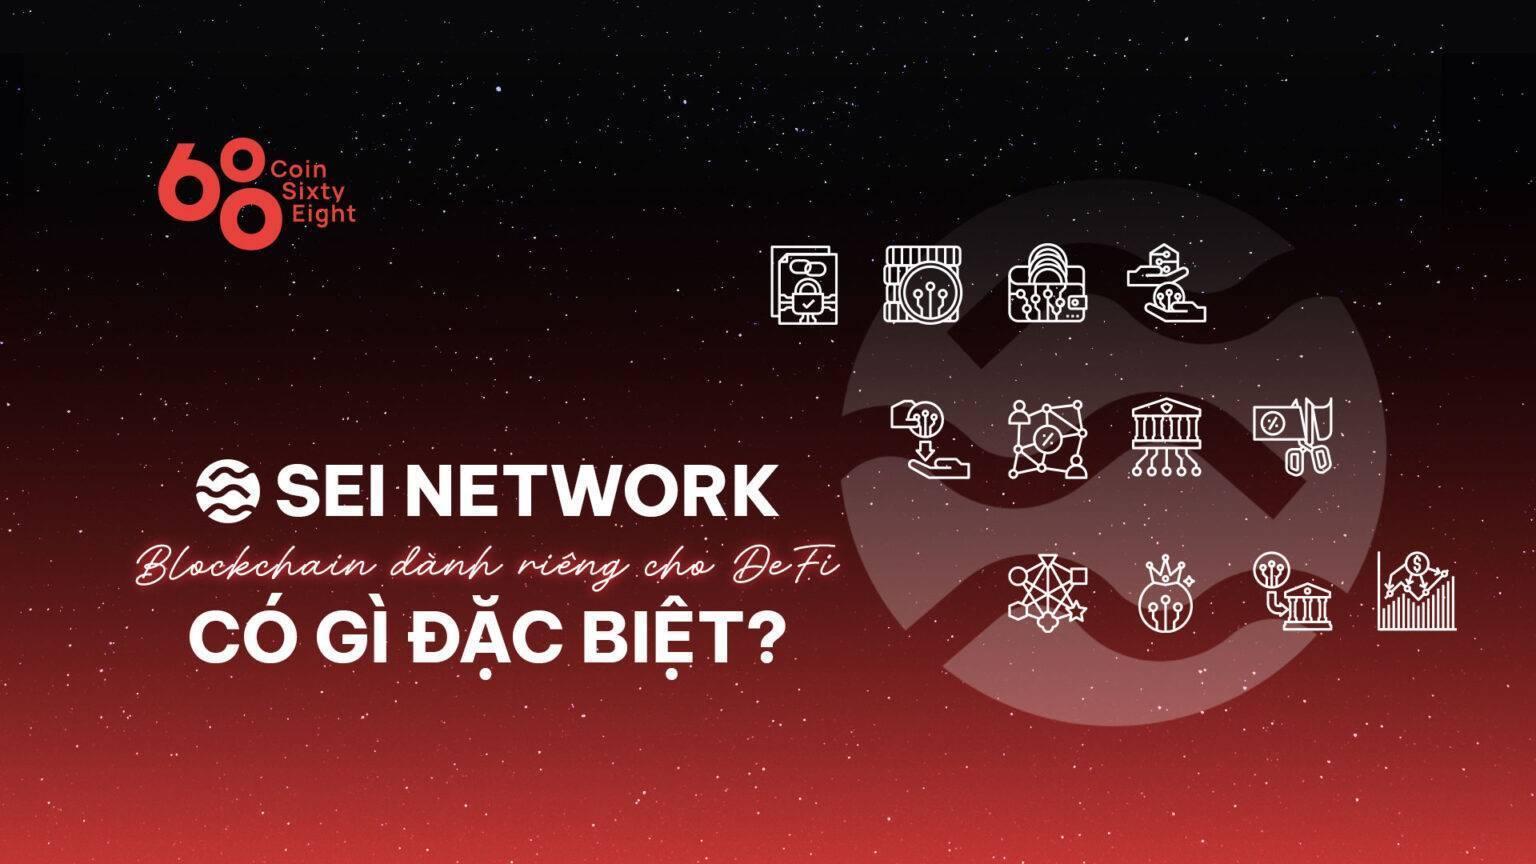 sei-network-blockchain-danh-rieng-cho-defi-co-gi-dac-biet